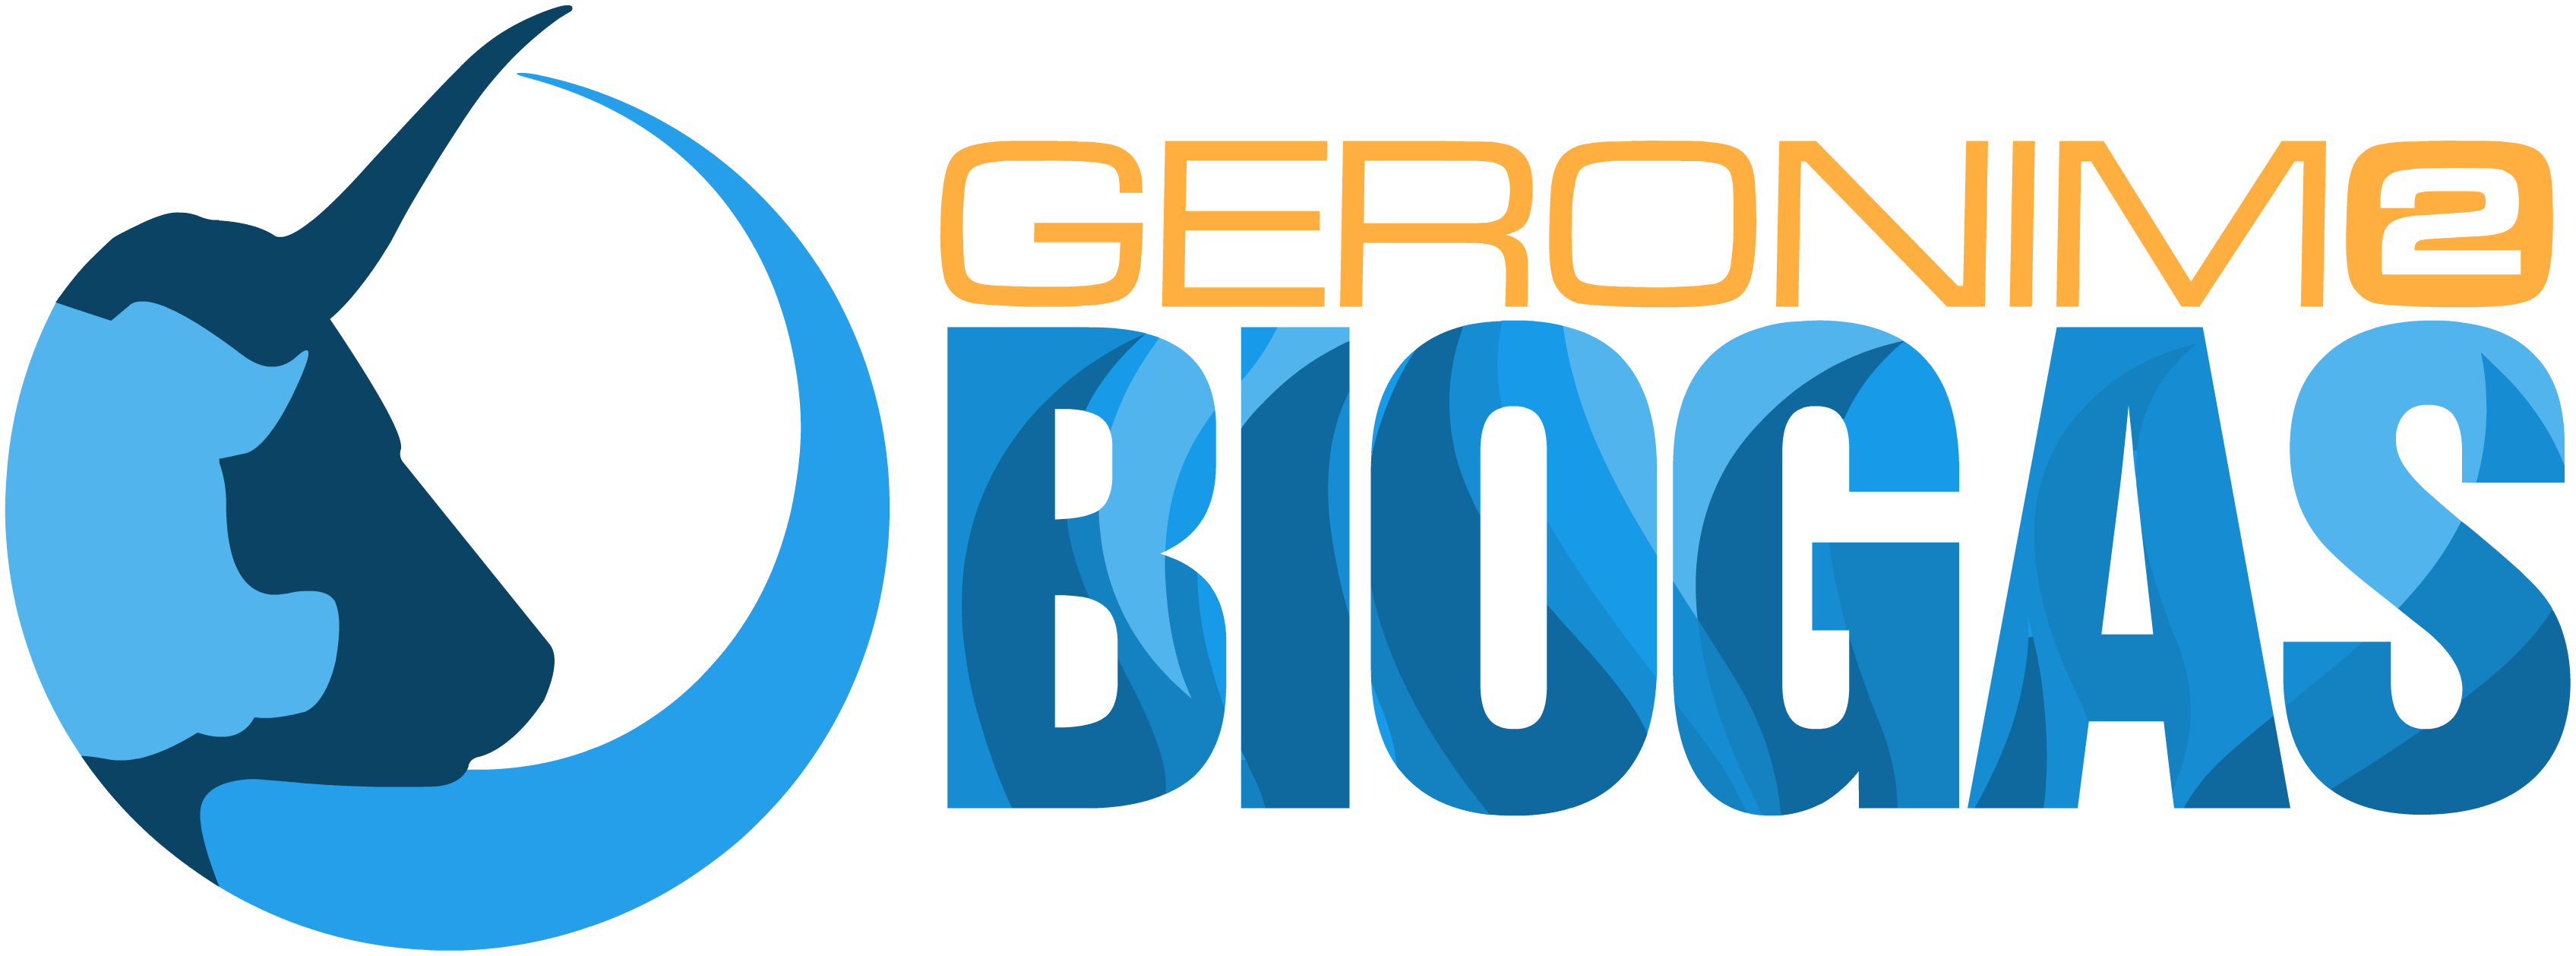 geronimo-ii-biogas-logo.png